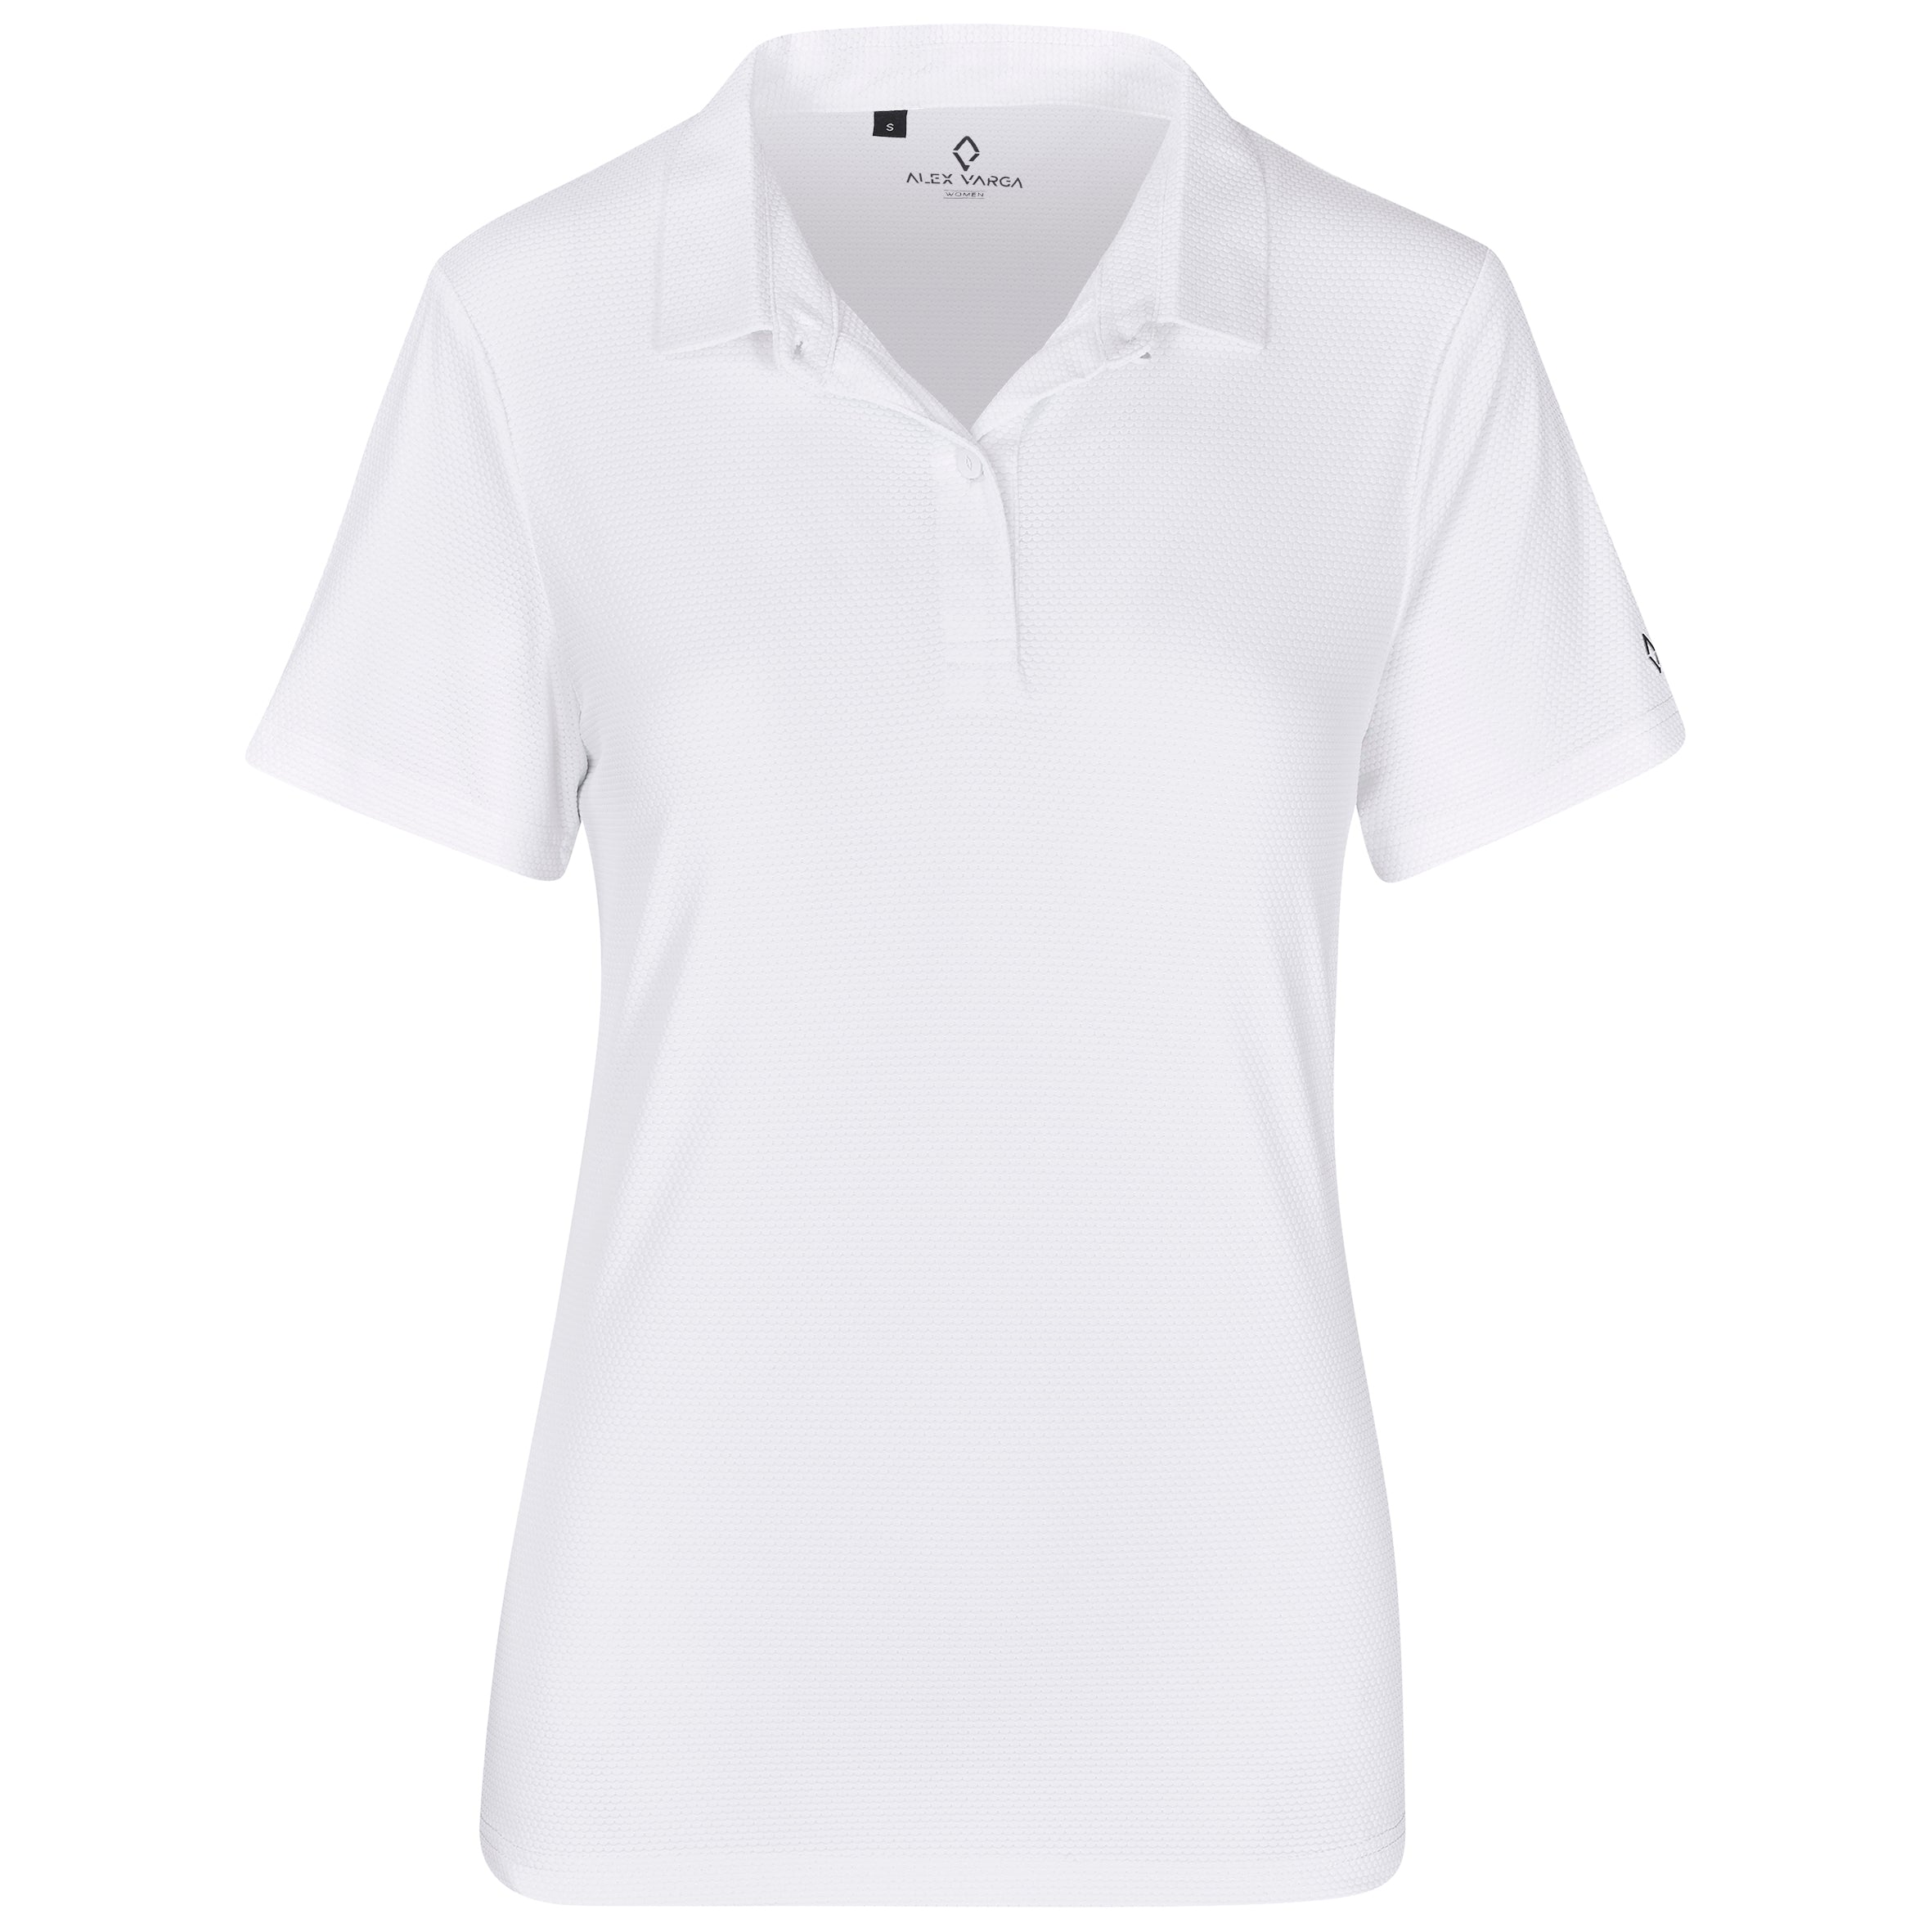 Ladies Skylla Golf Shirt L / White / W